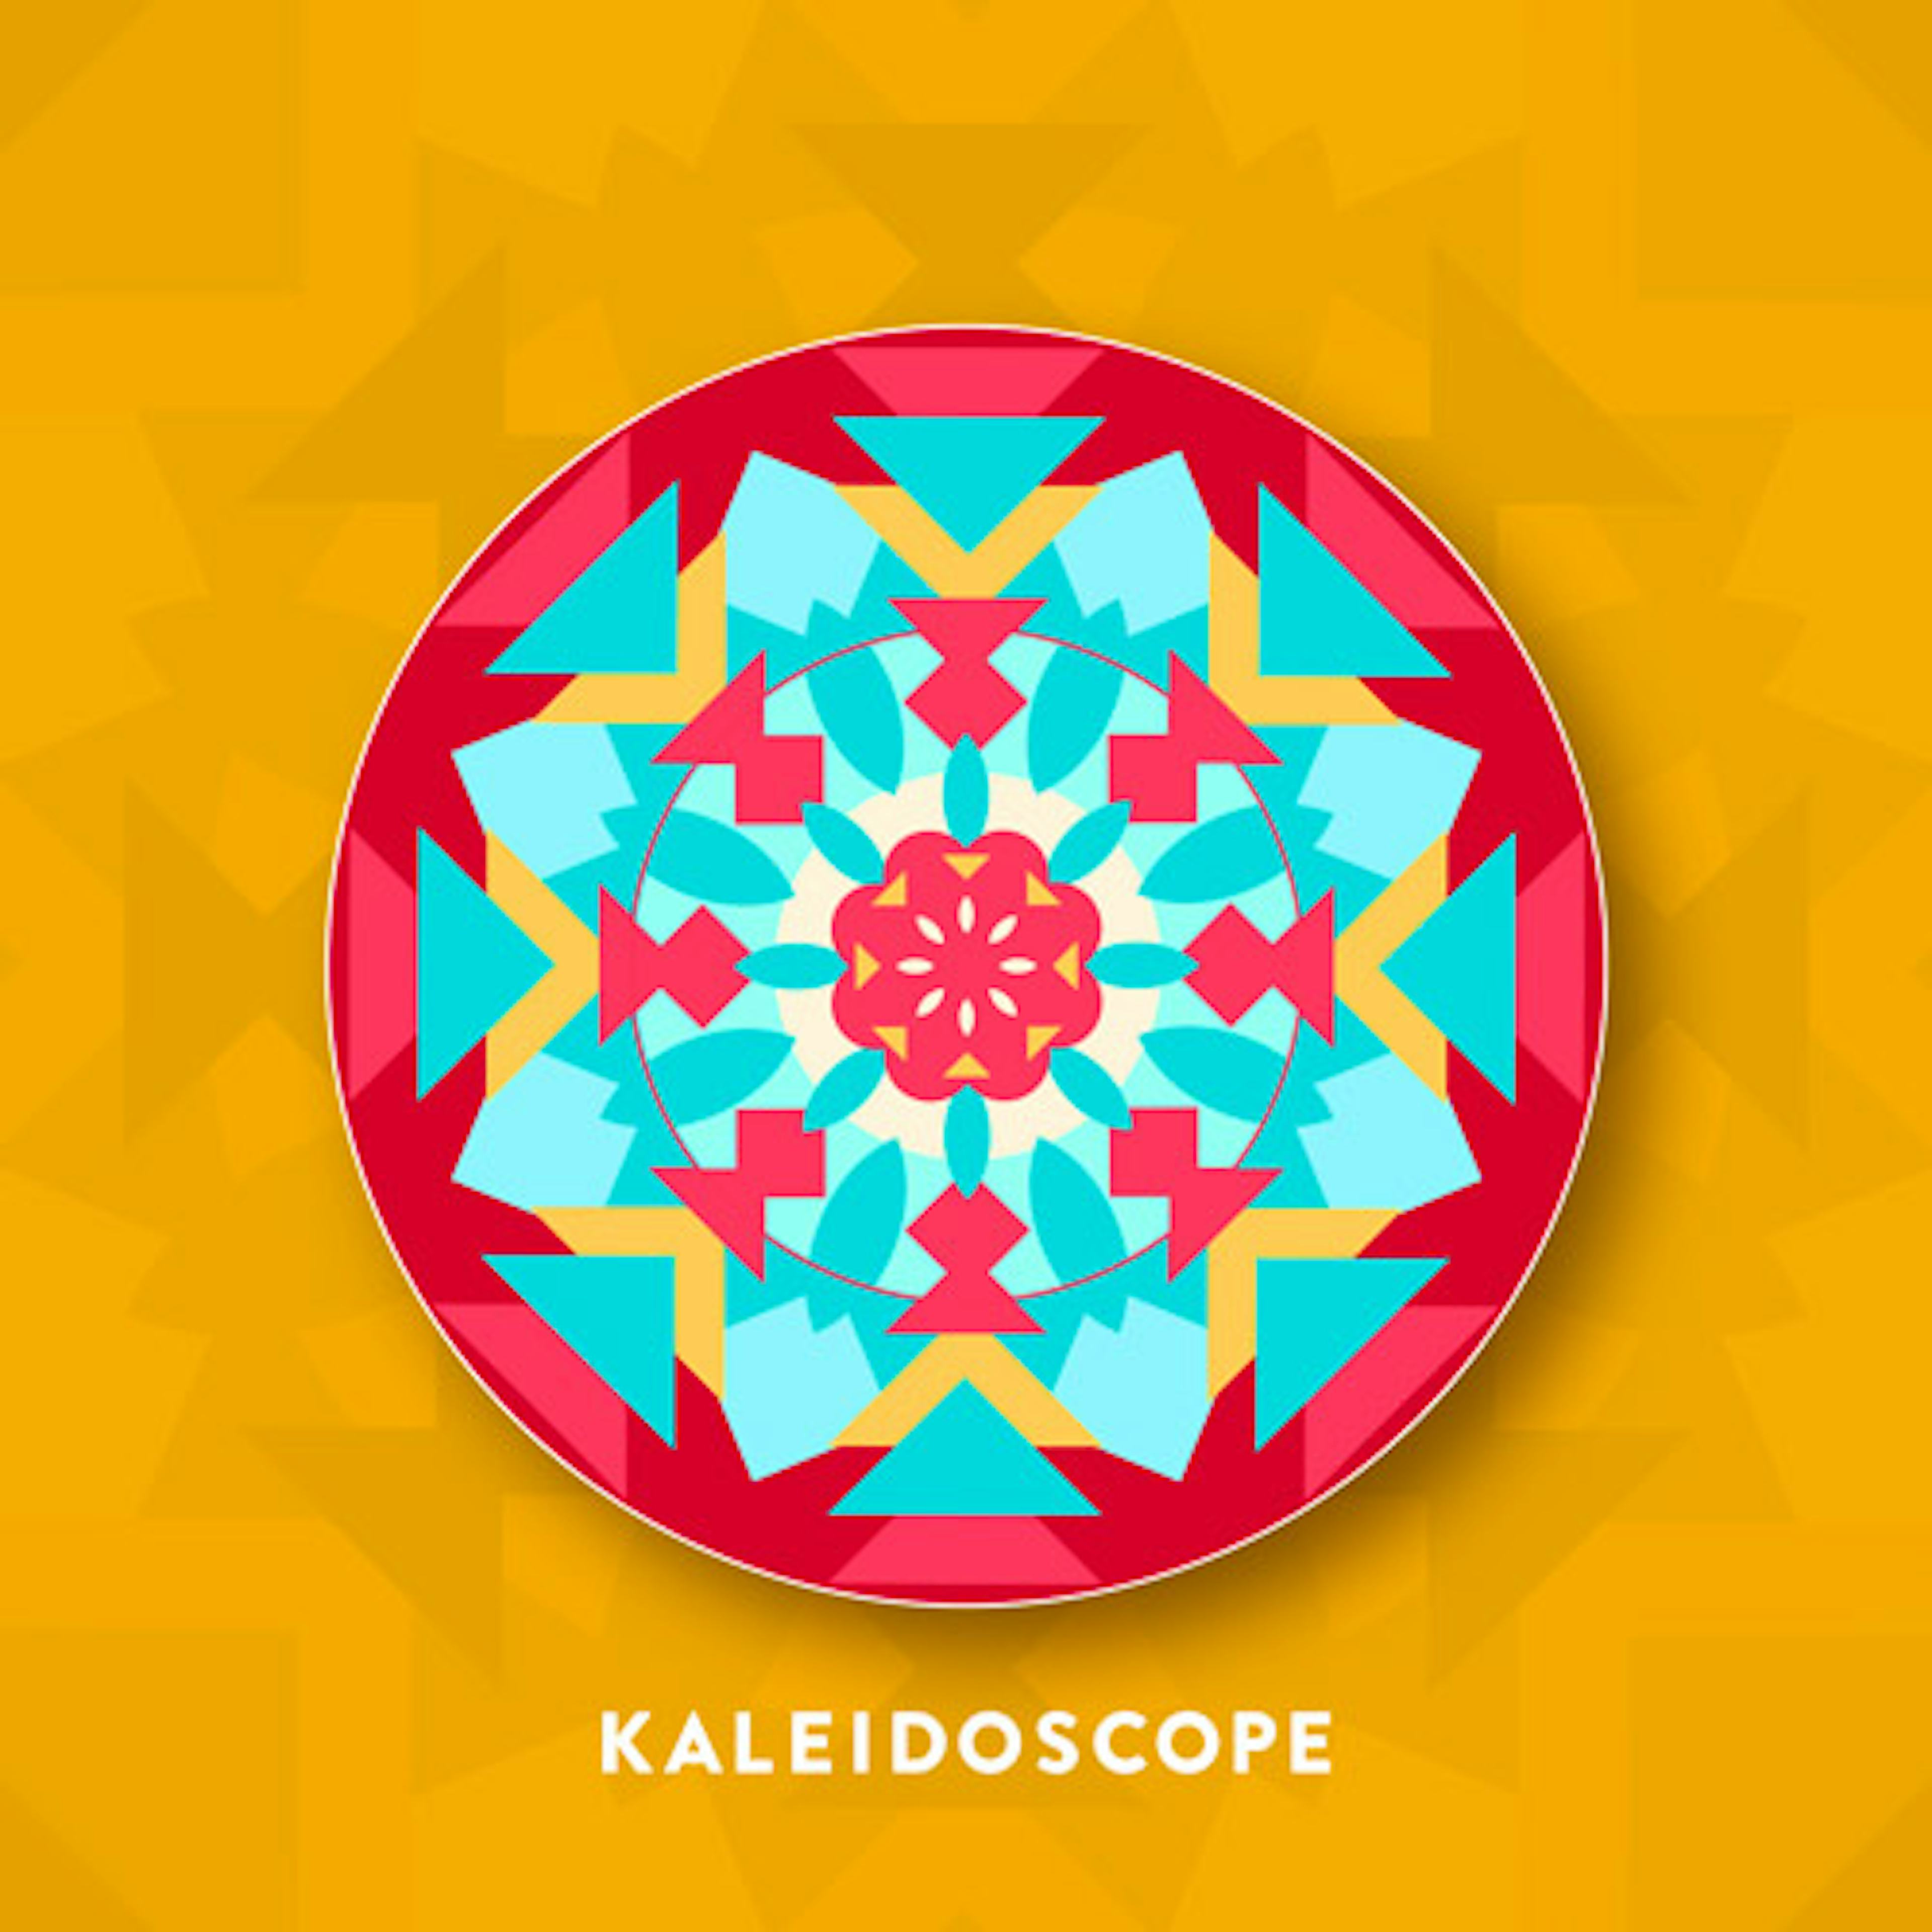 Kaleidoscope artwork